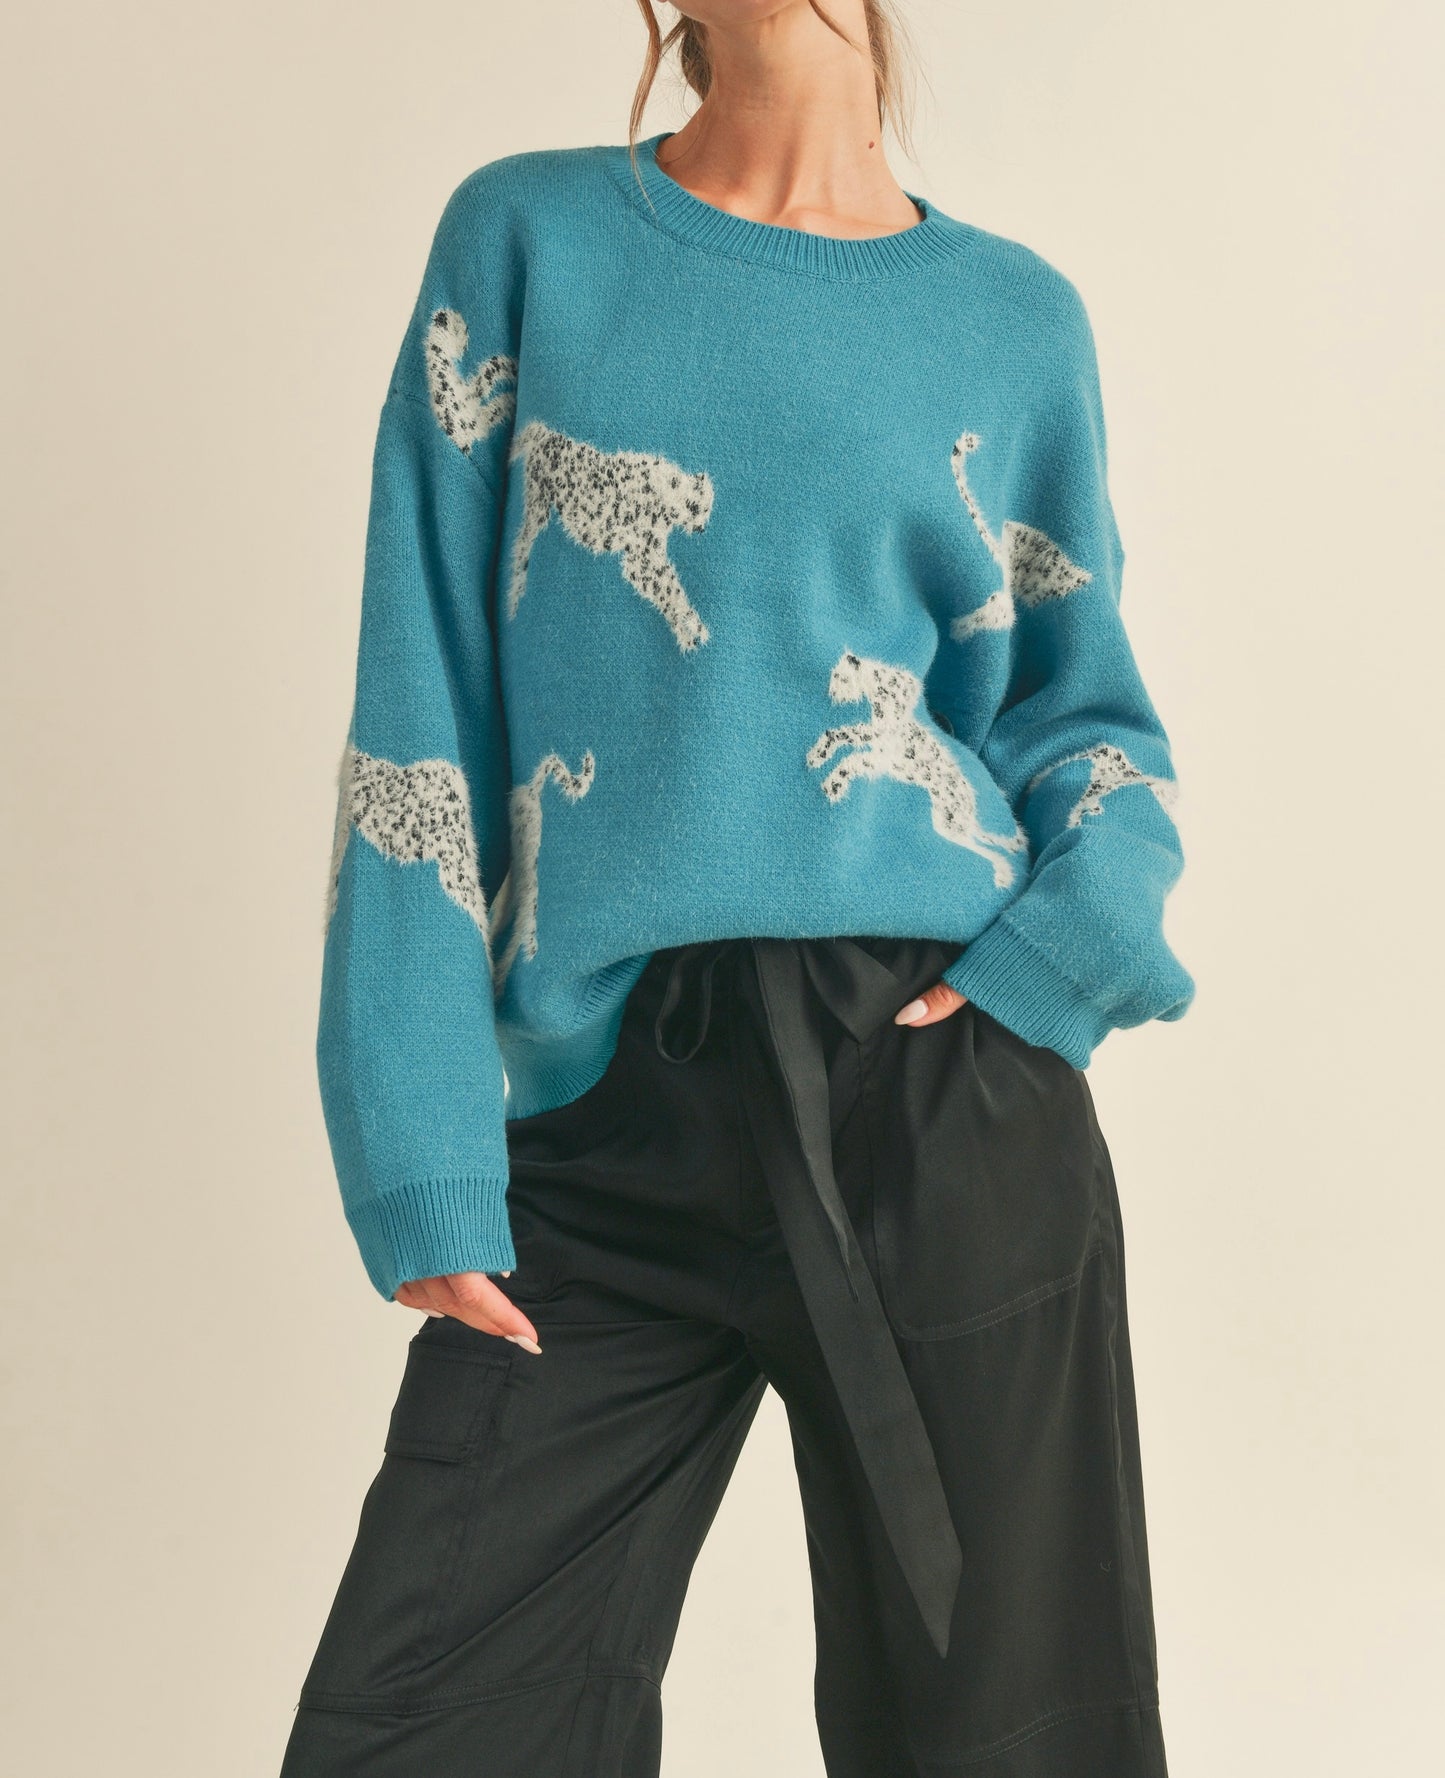 Teal Leopard Print Sweater